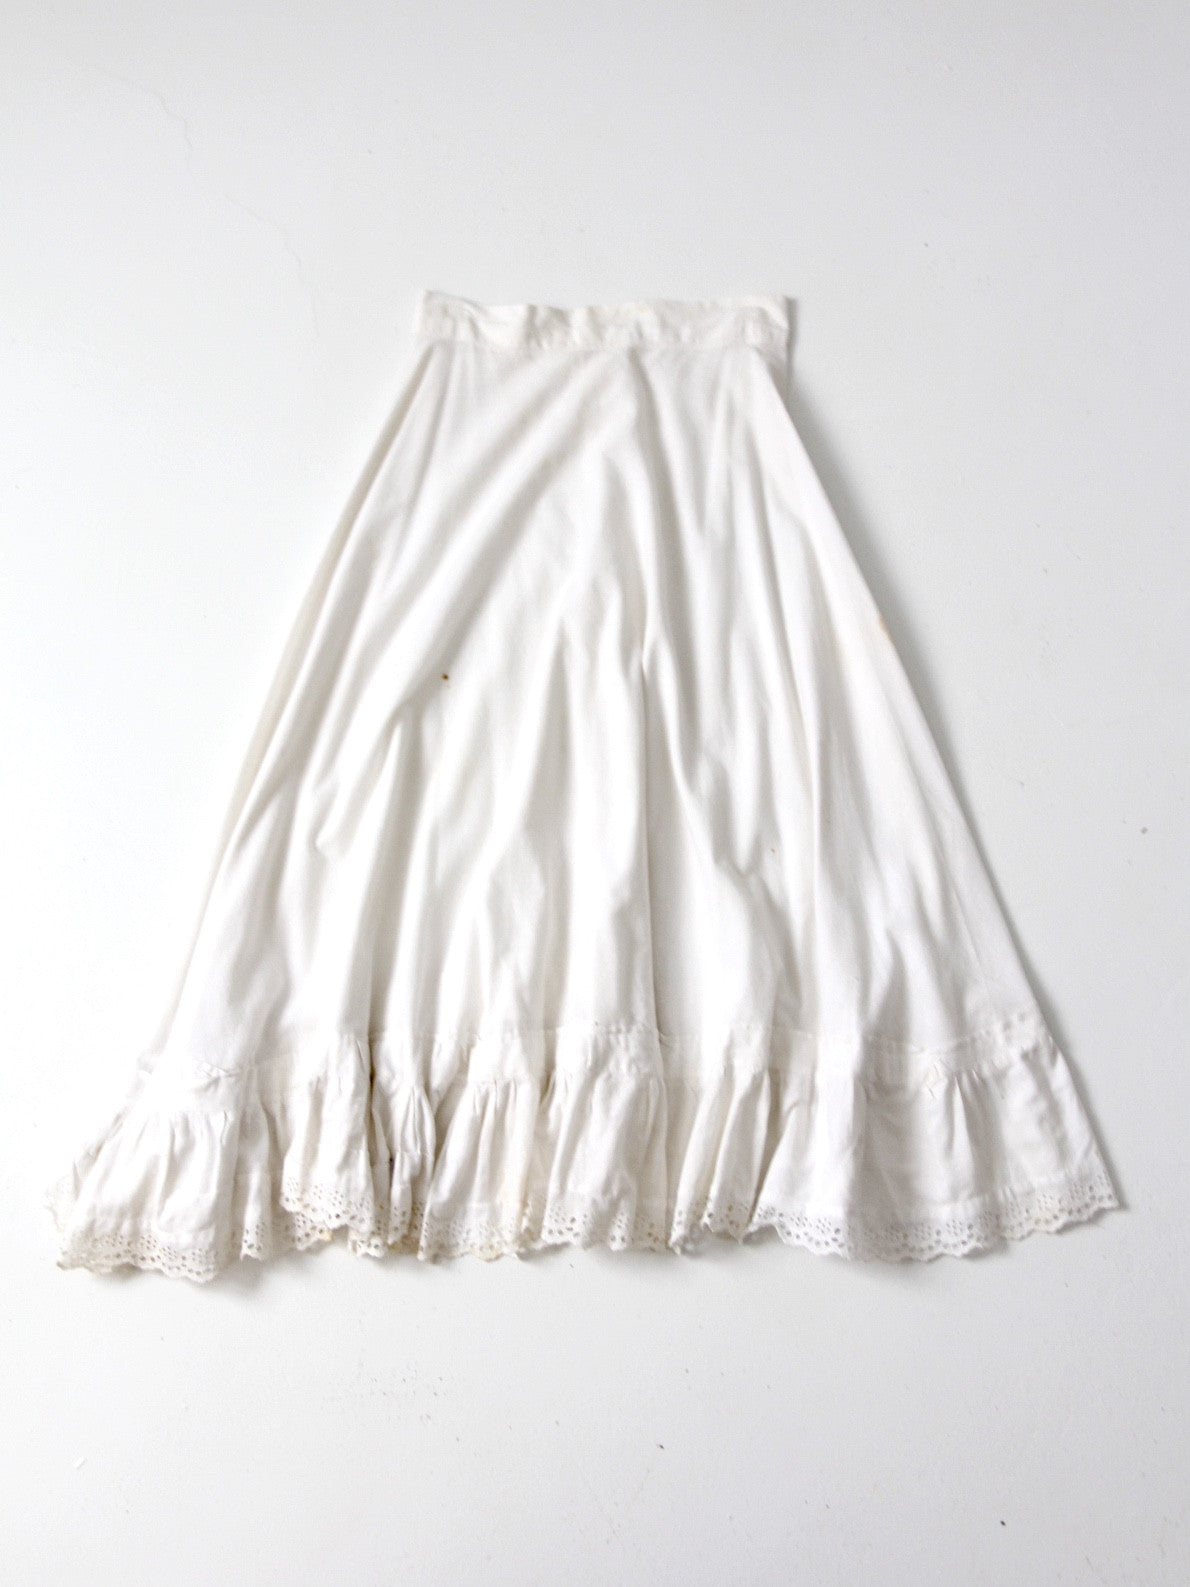 antique Victorian skirt